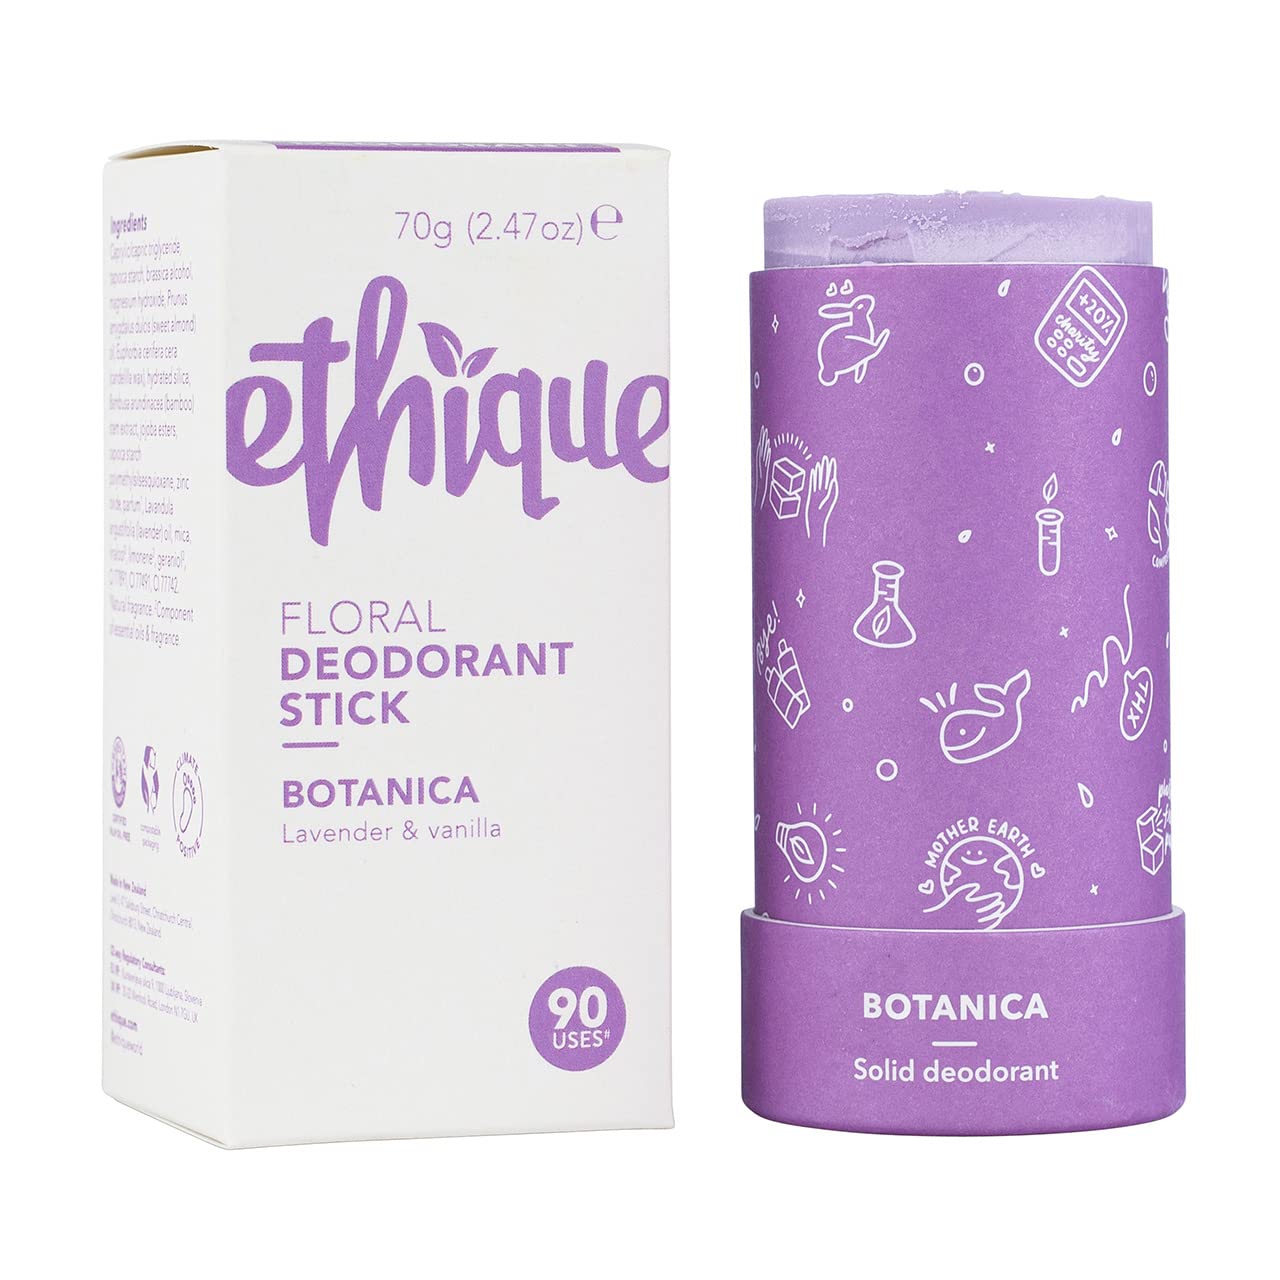 Ethique Botanica Floral Deodorant Stick for Men & Women - Aluminum-Free, Plastic-Free, Vegan, Cruelty-Free, Eco-Friendly, 2.47 oz (Pack of 1)